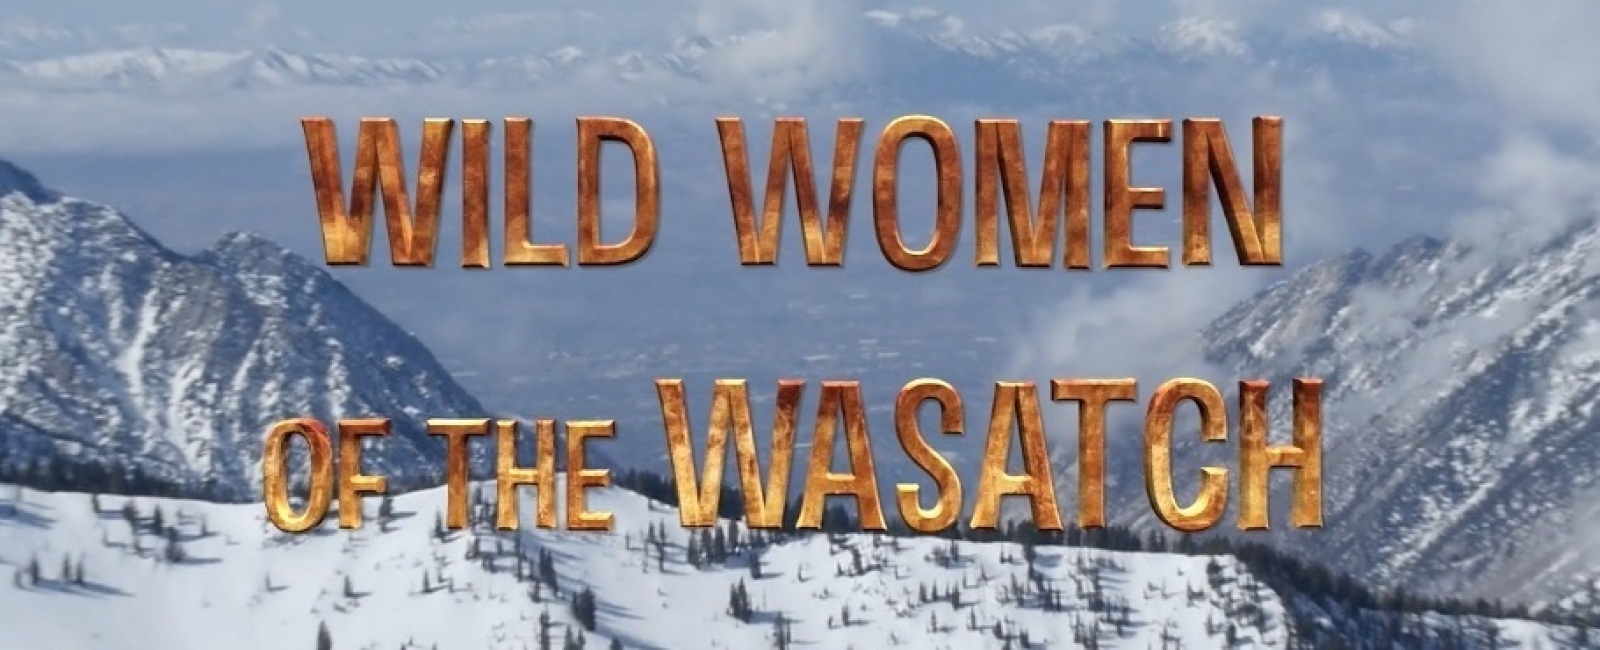 Wild Women of Wasatch | Escape the Heat